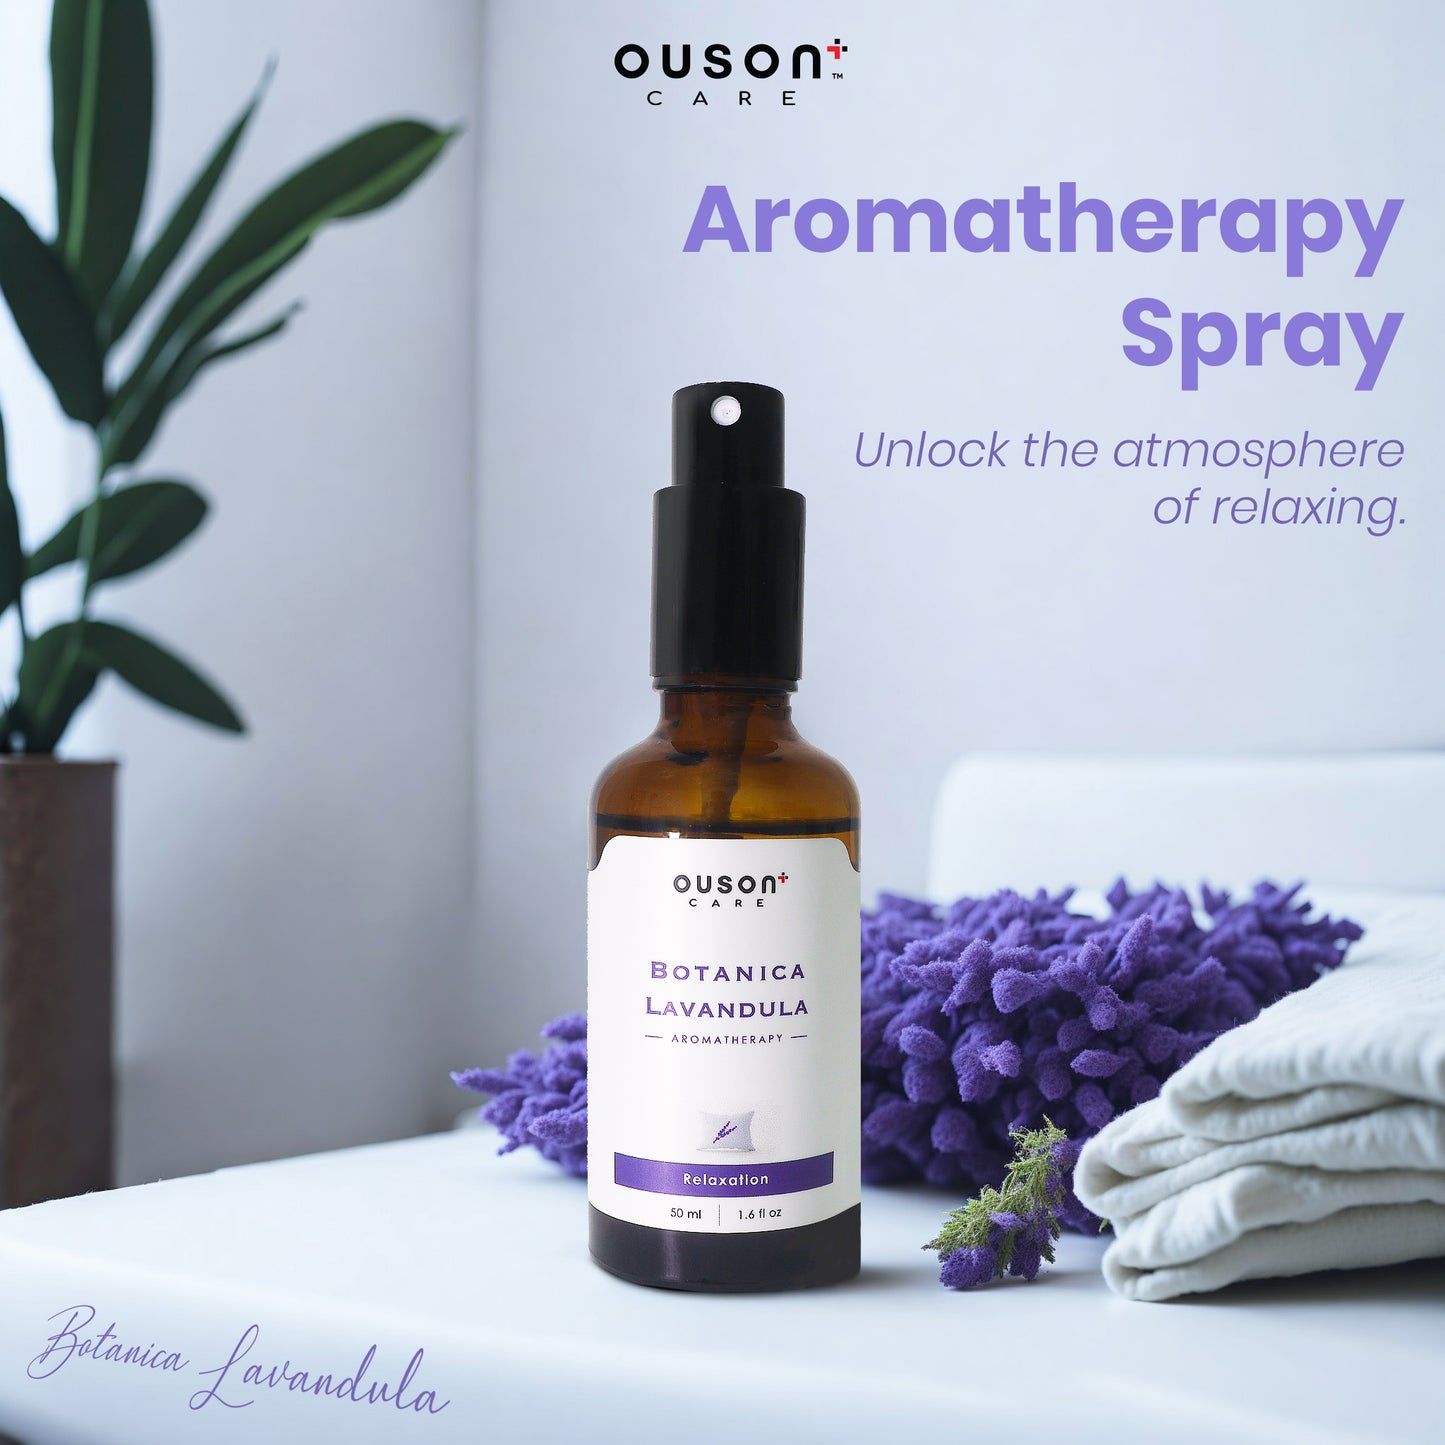 Ouson Care Botanica Lavandula Aromatherapy Spray 50ml